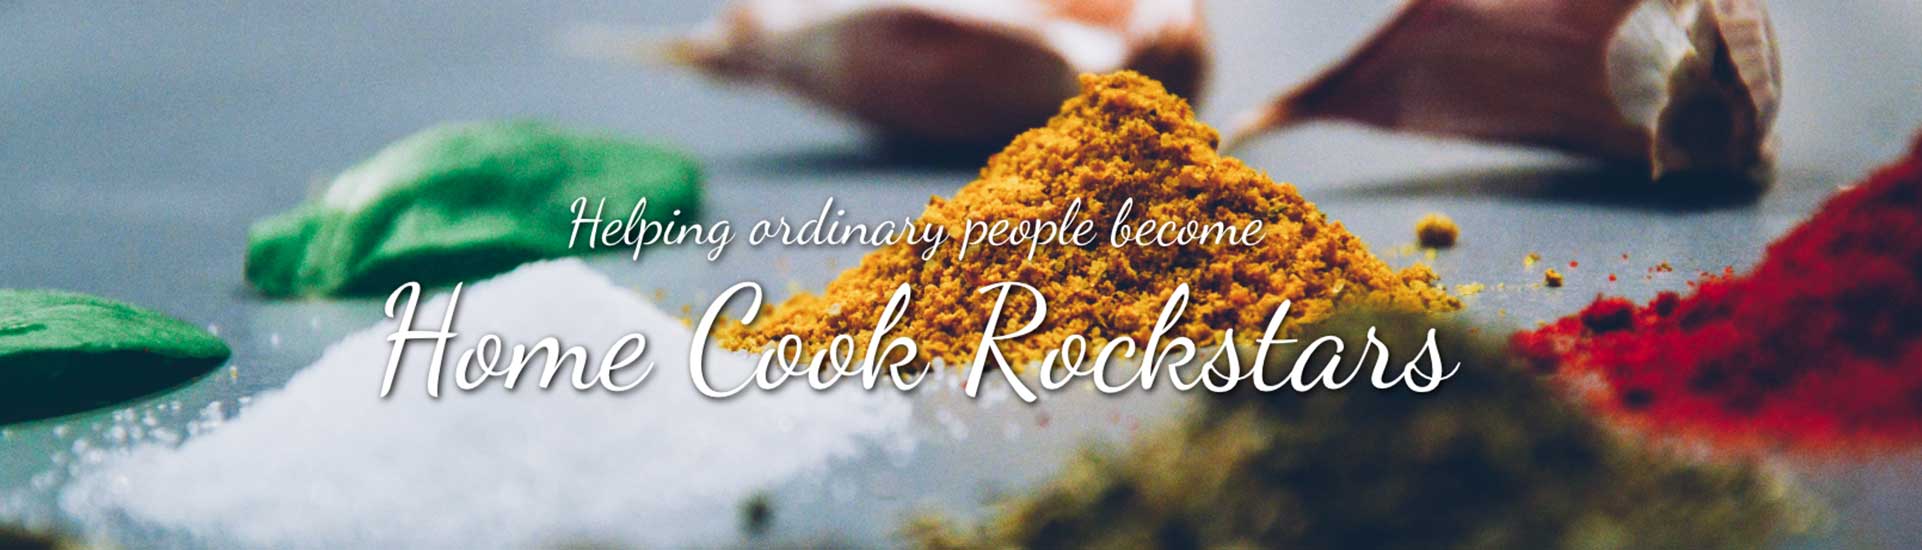 https://casualgourmet.com/wp-content/uploads/2015/07/cg-home-cook-rockstars.jpg